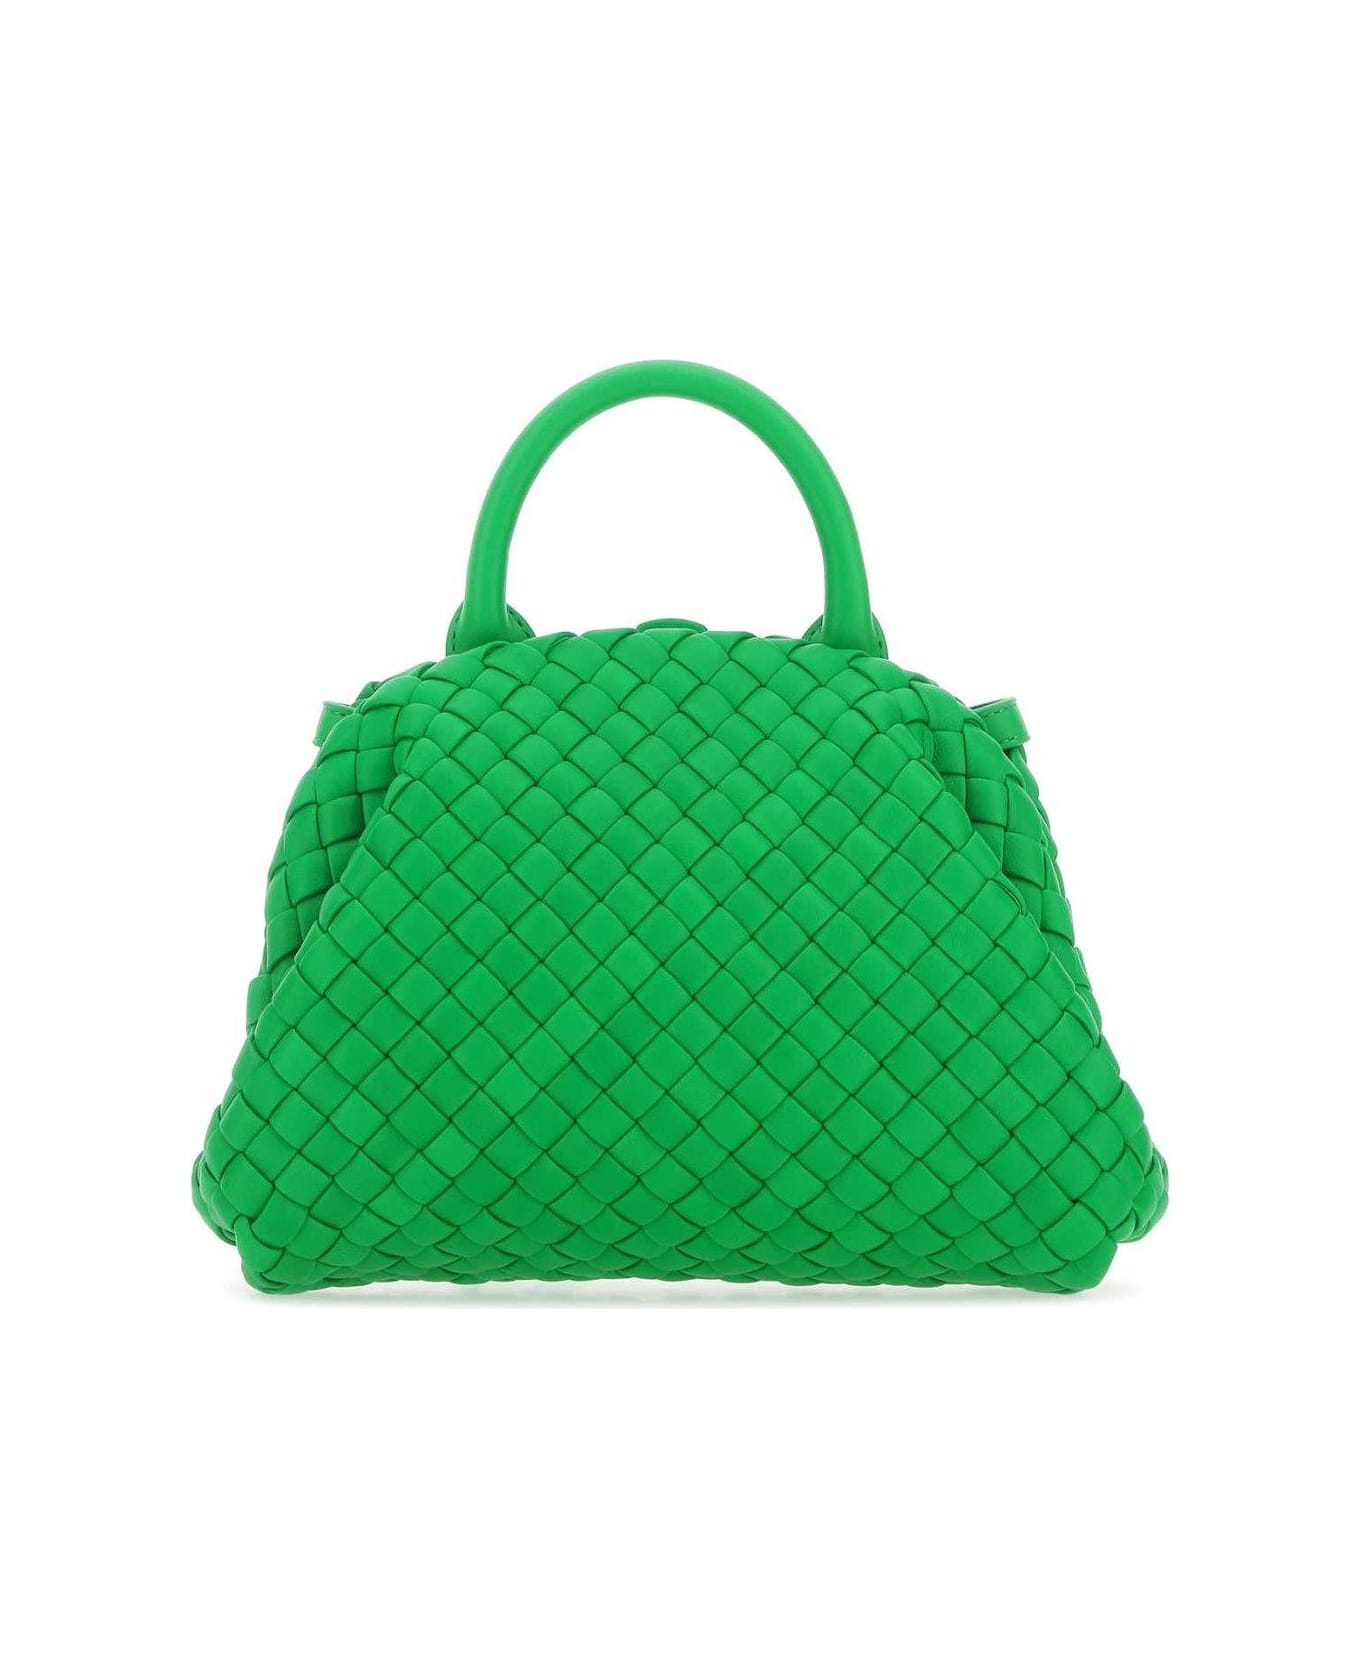 Bottega Veneta Padded Intreccio Mini Tote Bag - Green